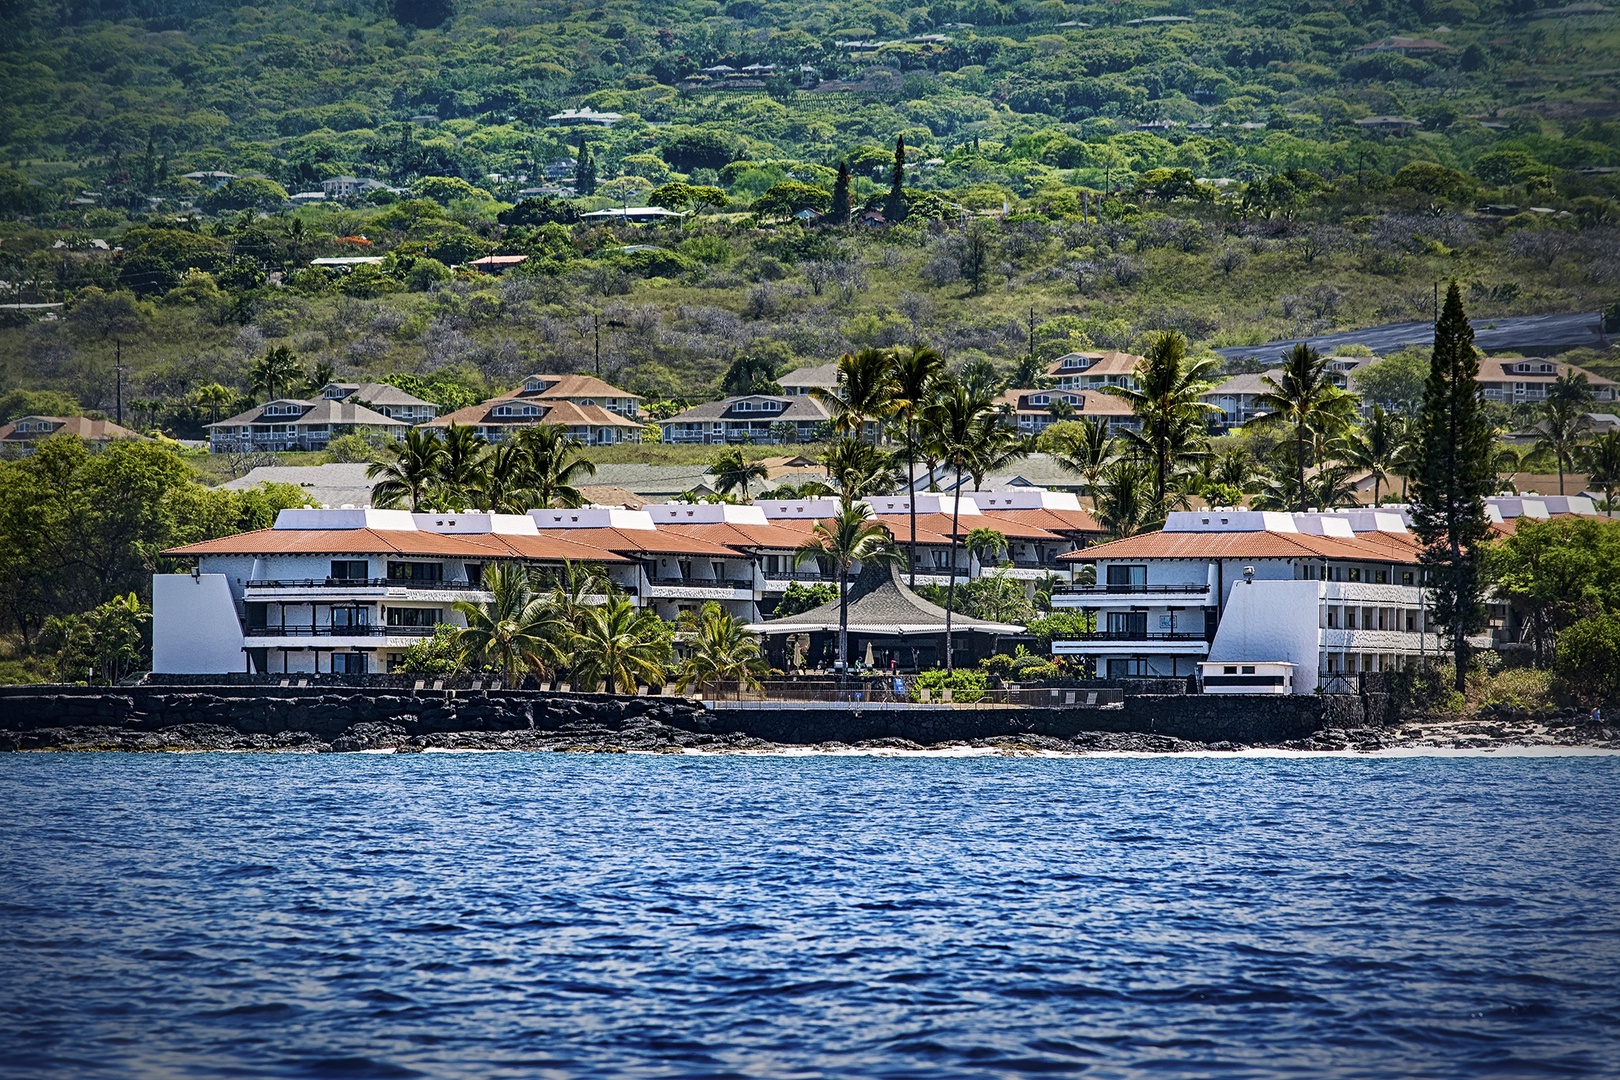 Kailua Kona Vacation Rentals, Casa De Emdeko 235 - From the ocean looking back towards Casa De Emdeko